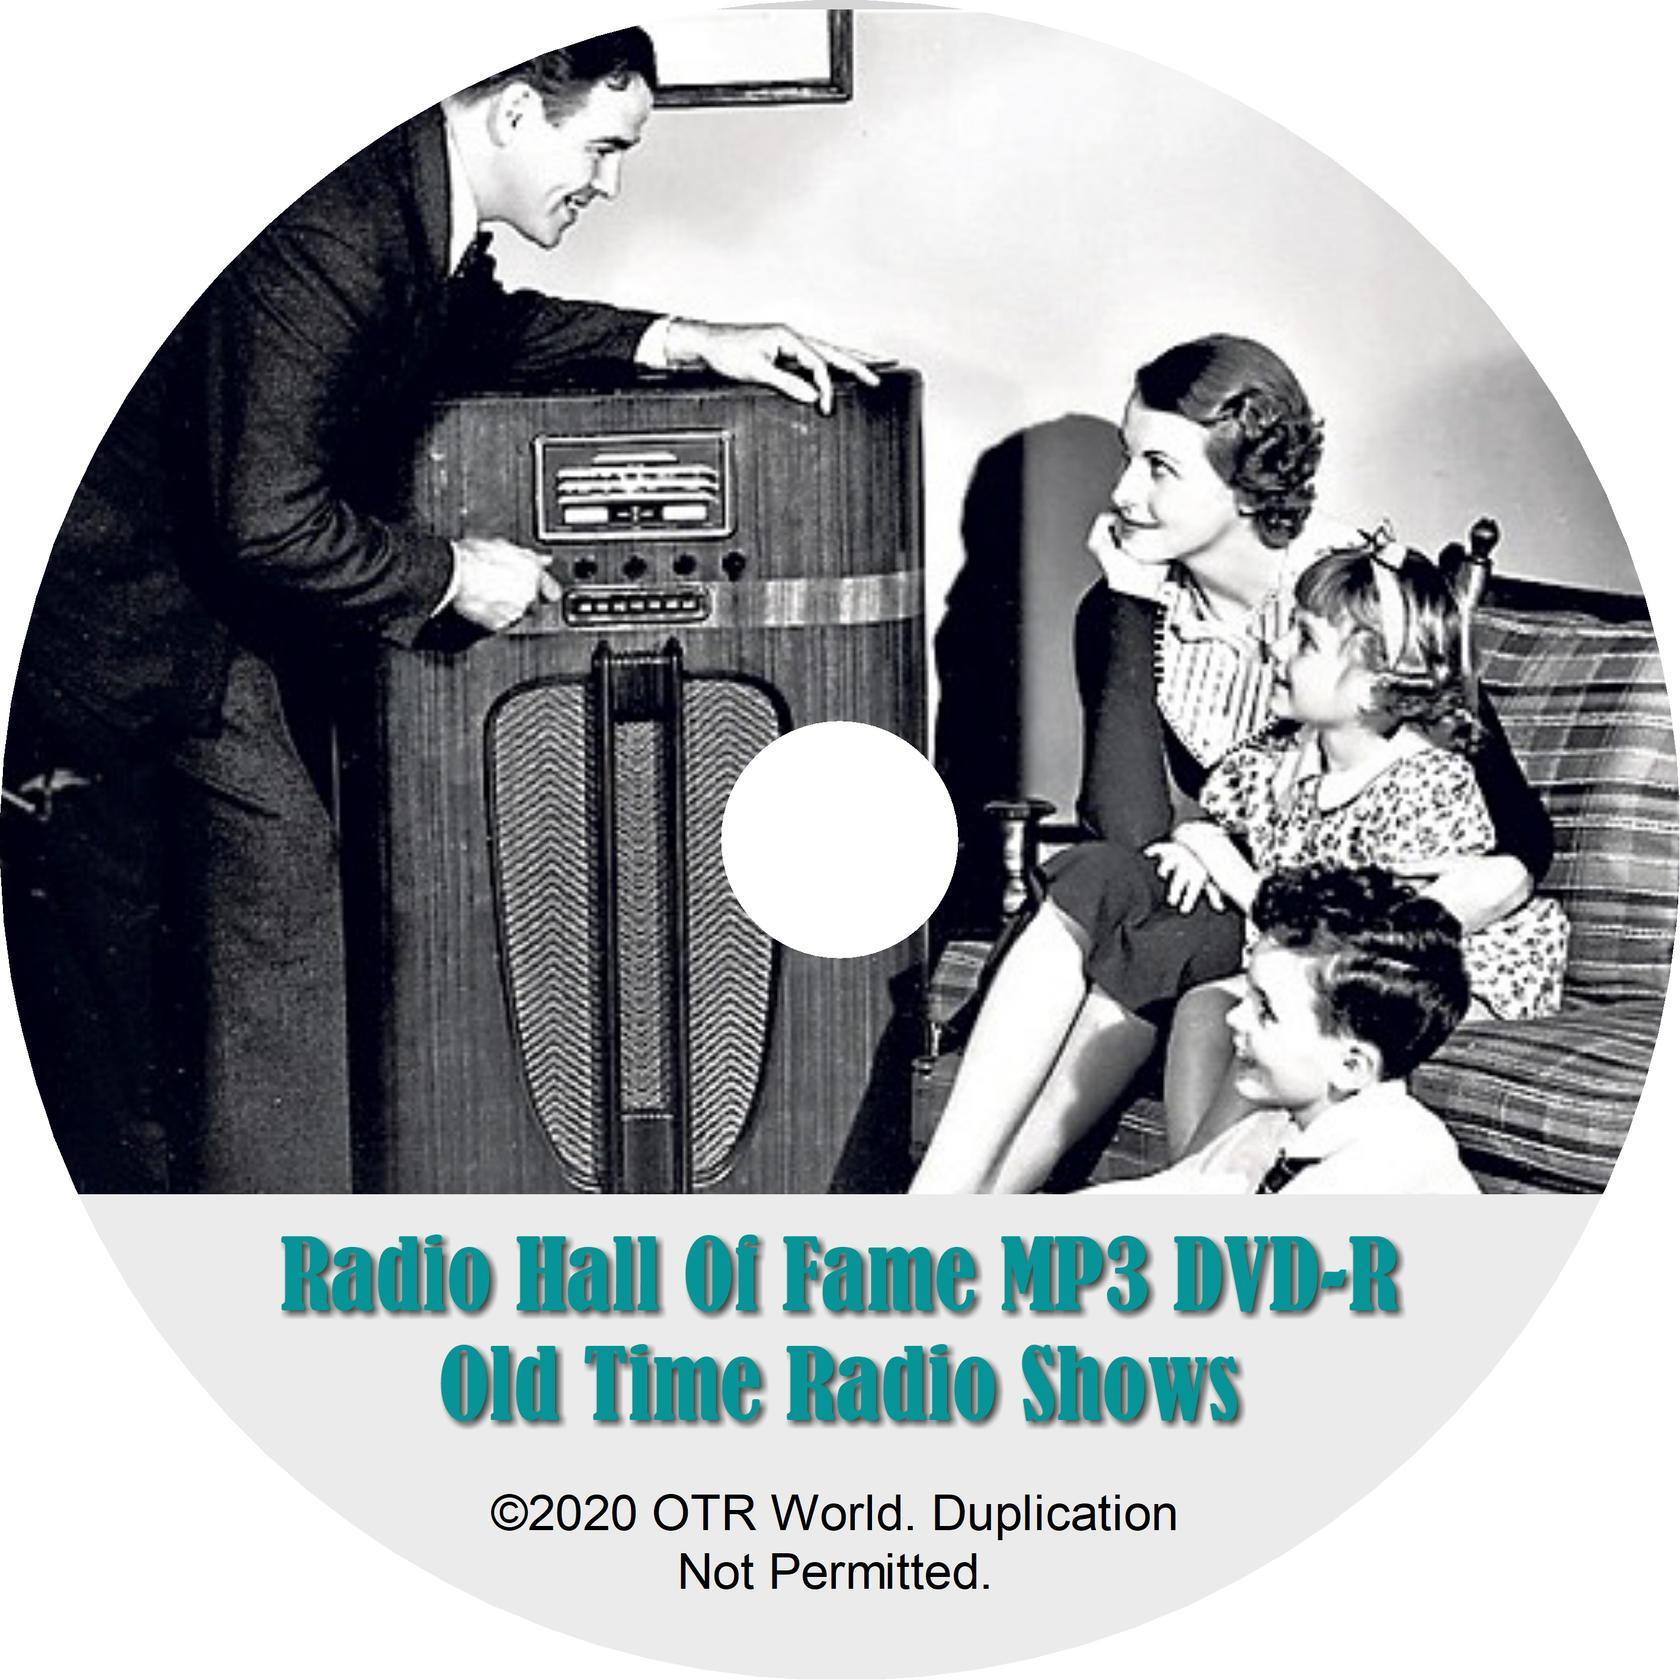 Radio Hall Of Fame Old Time Radio Shows MP3 DVD-R OTR OTRS 91 Episodes - OTR World